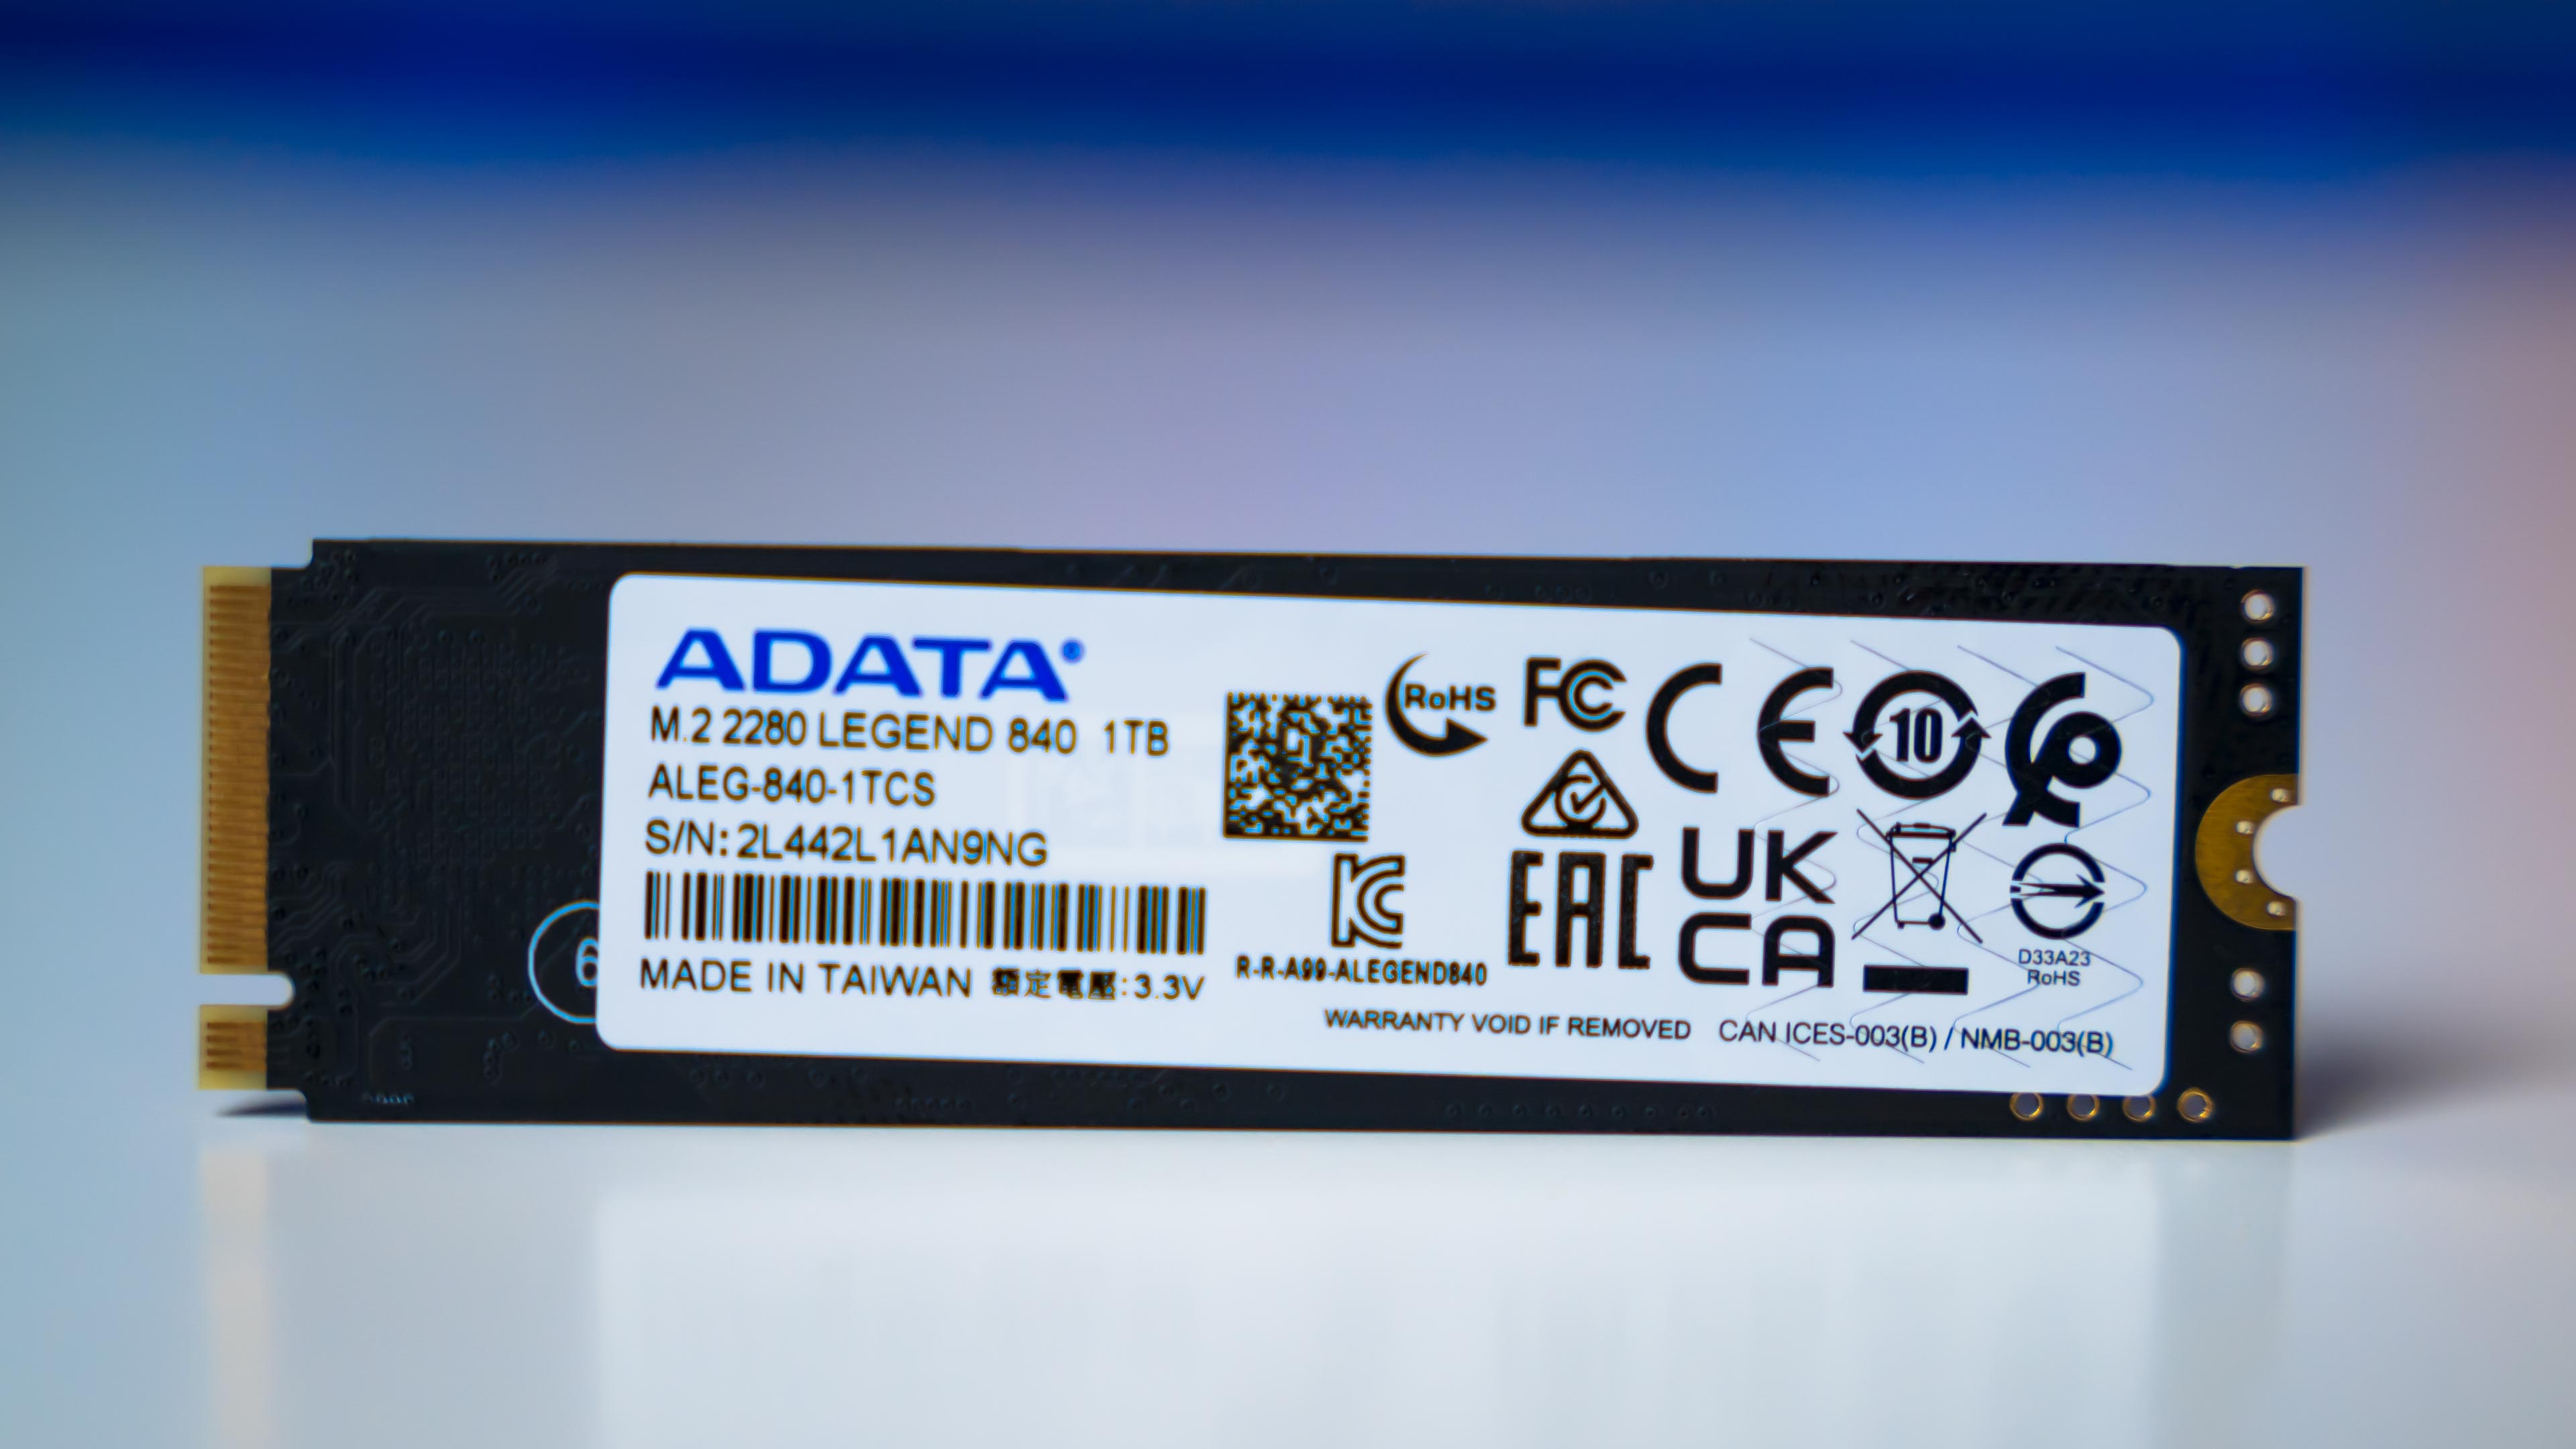 ADATA Legend 840 SSD (2)